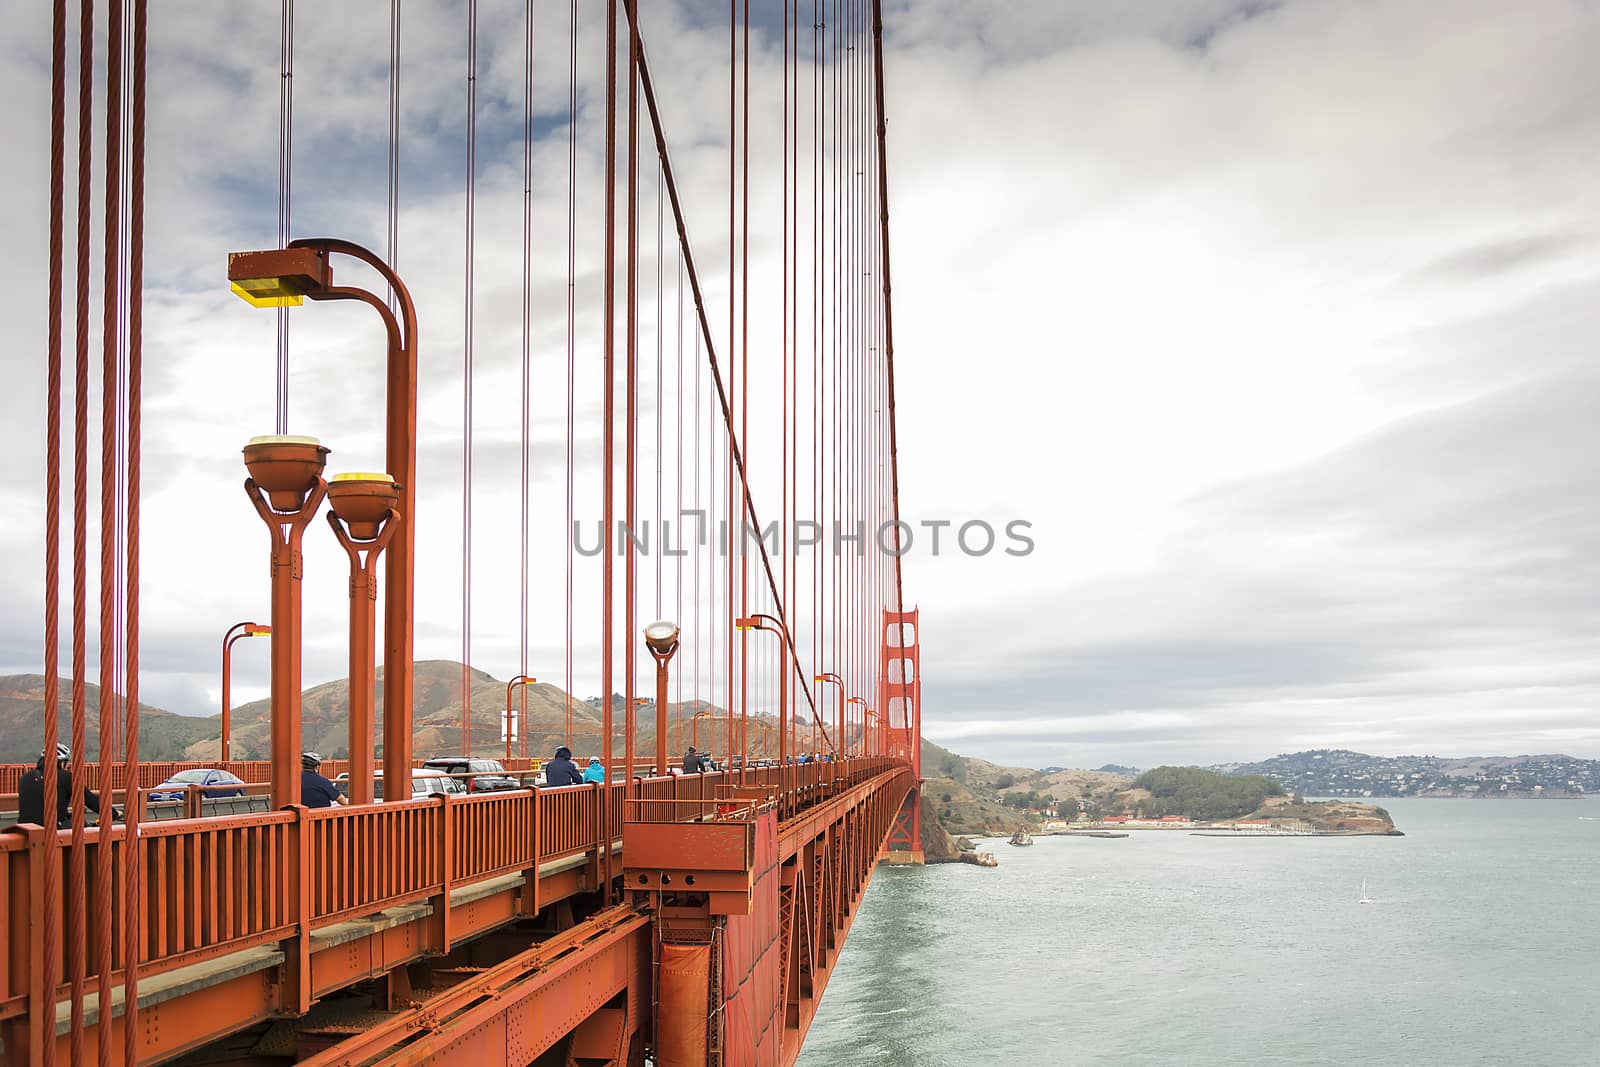 detail of the Golden Gate suspension bridge by rarrarorro